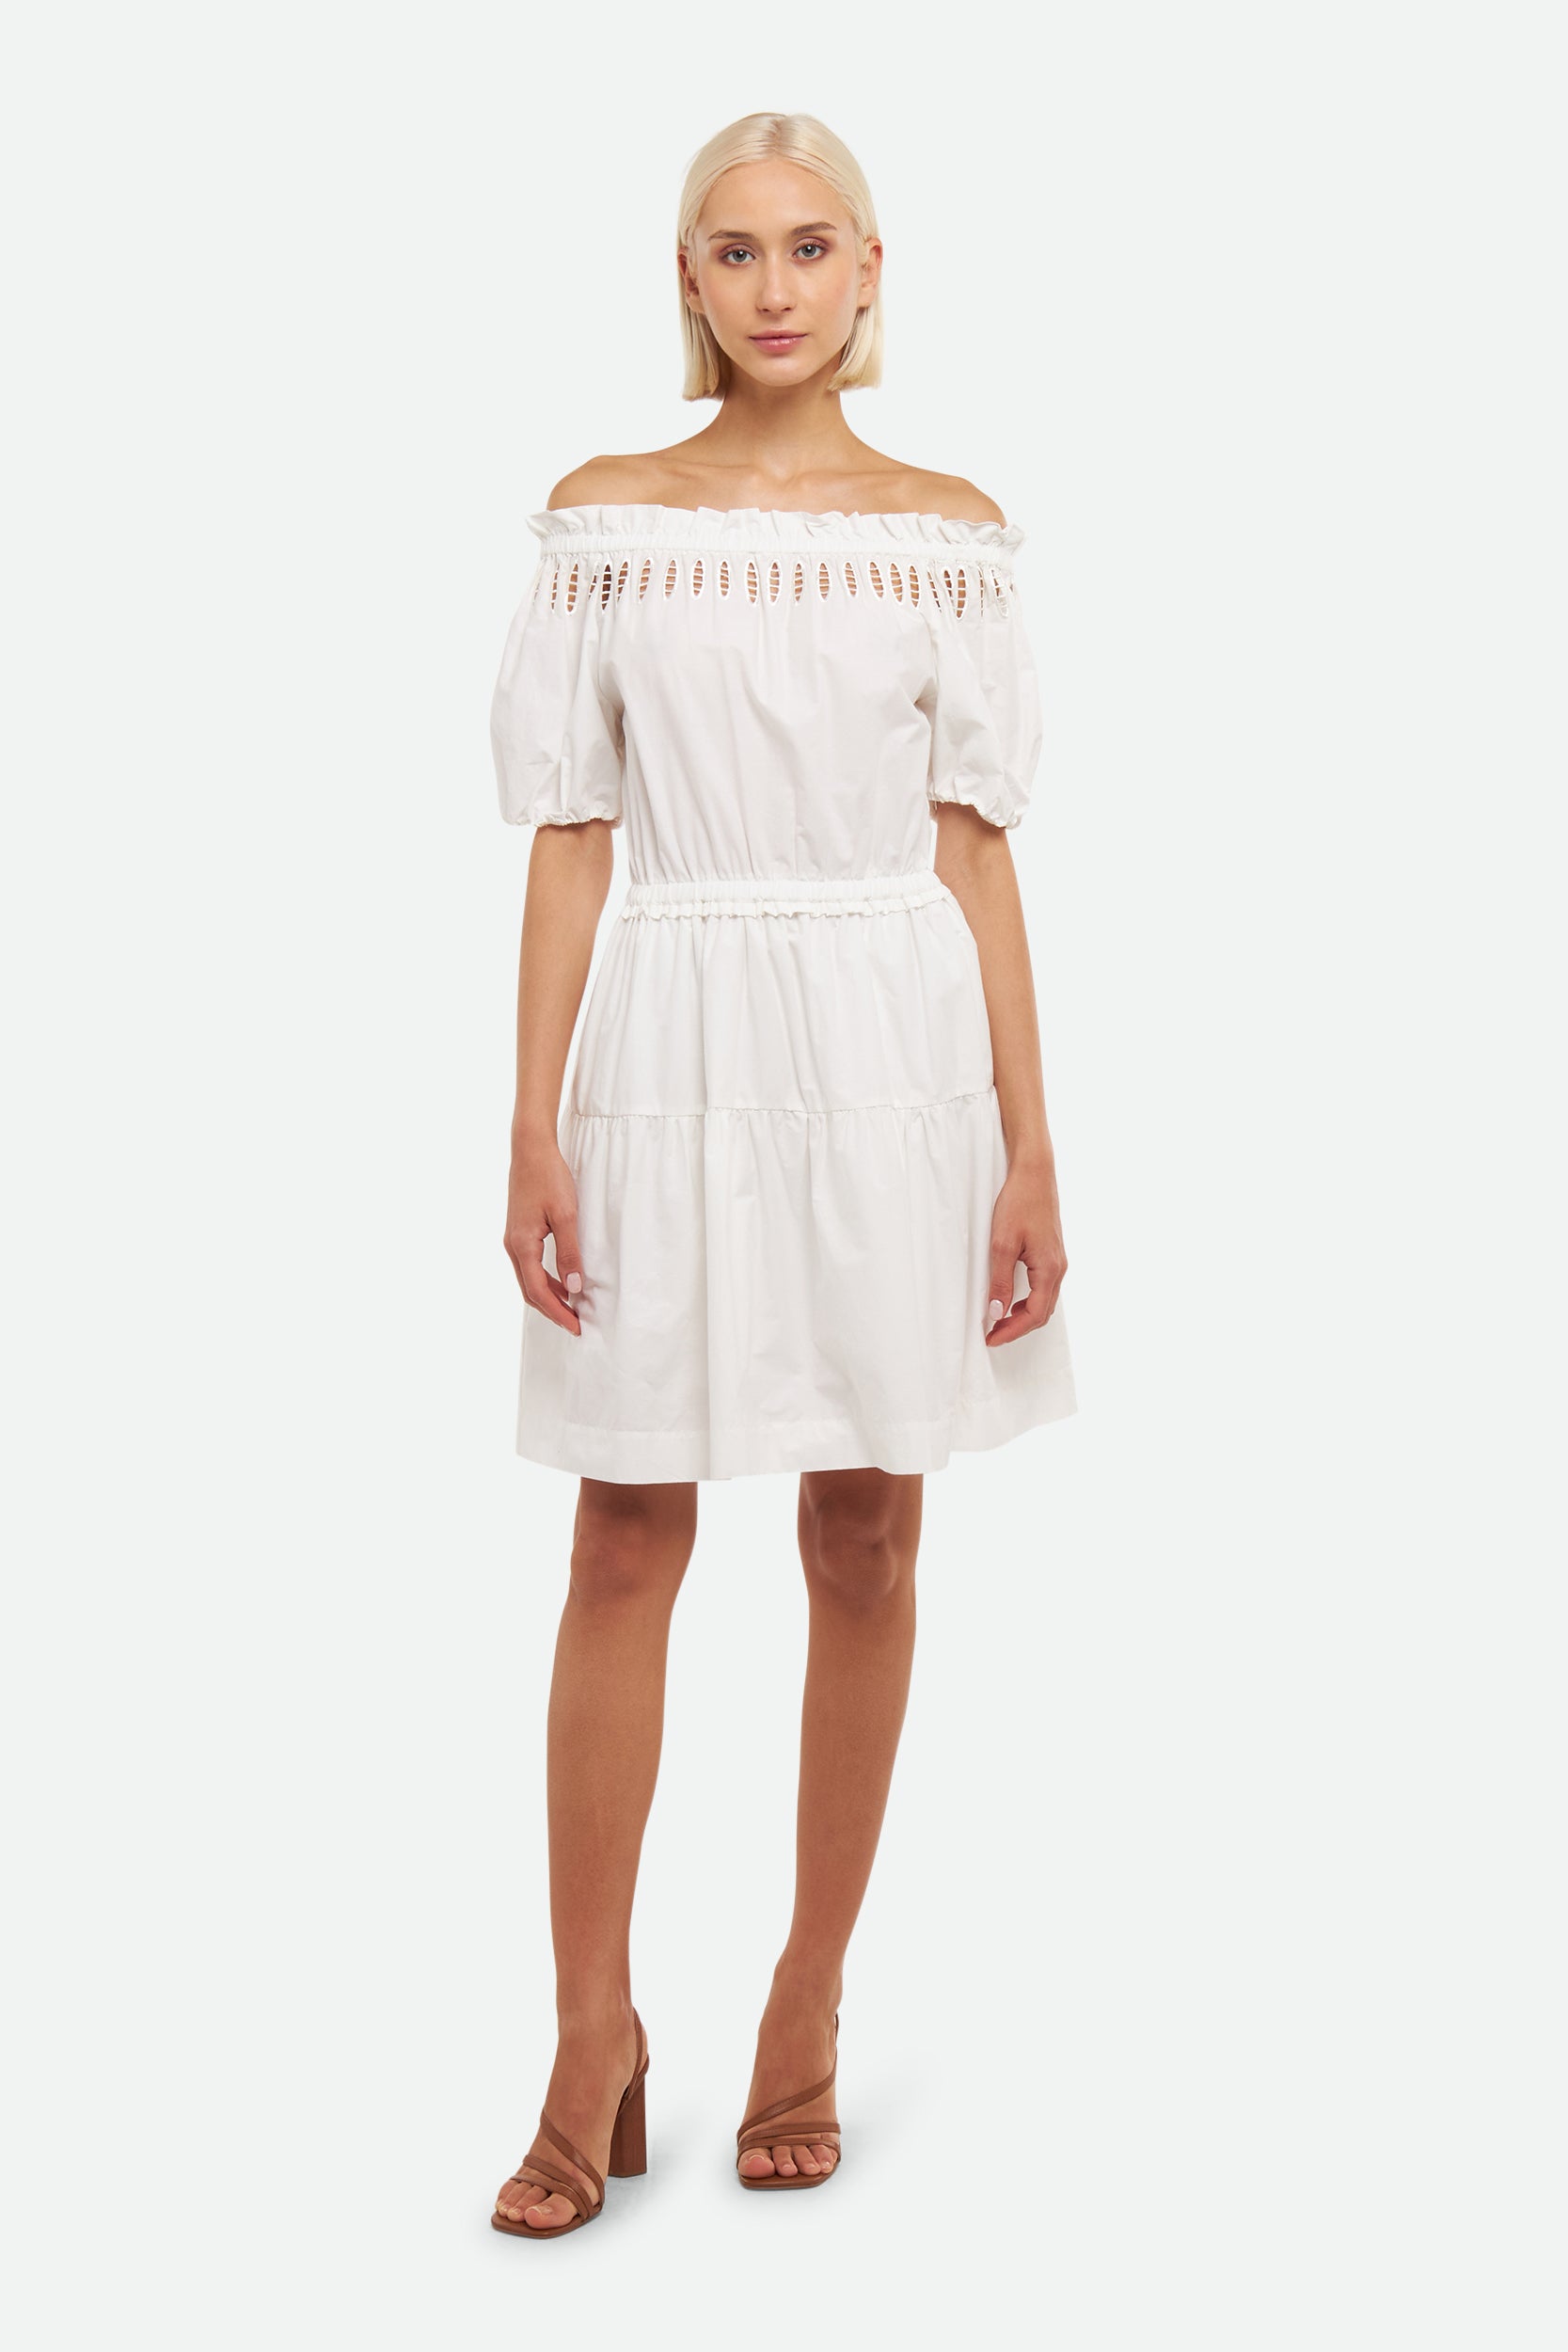 Liu Jo White Dress